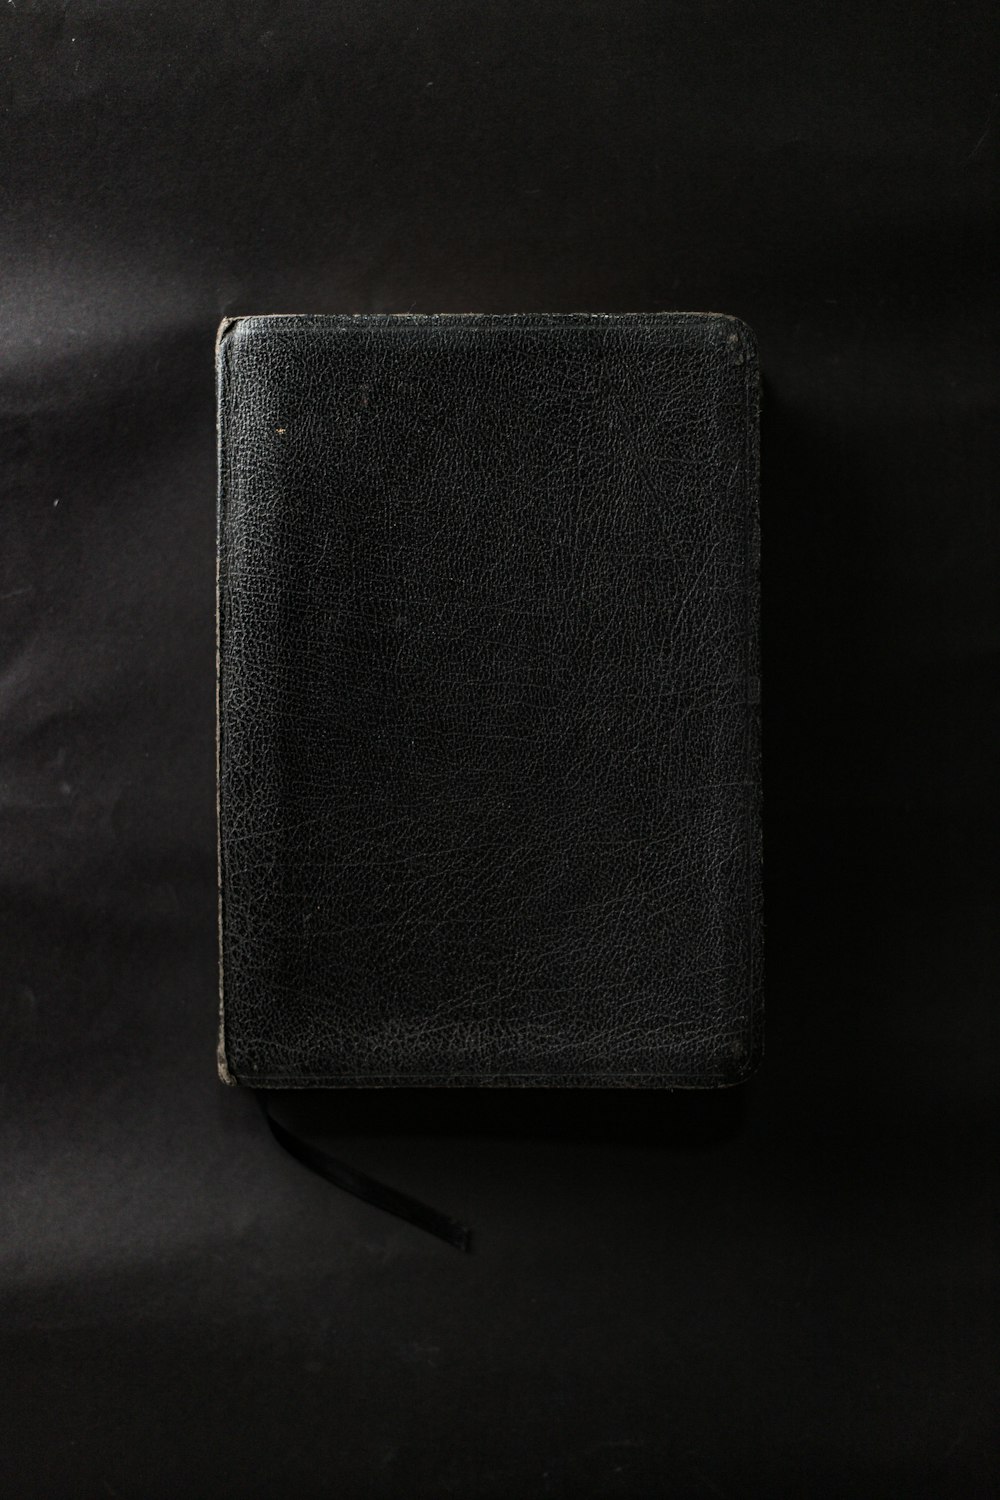 black leather wallet on black textile